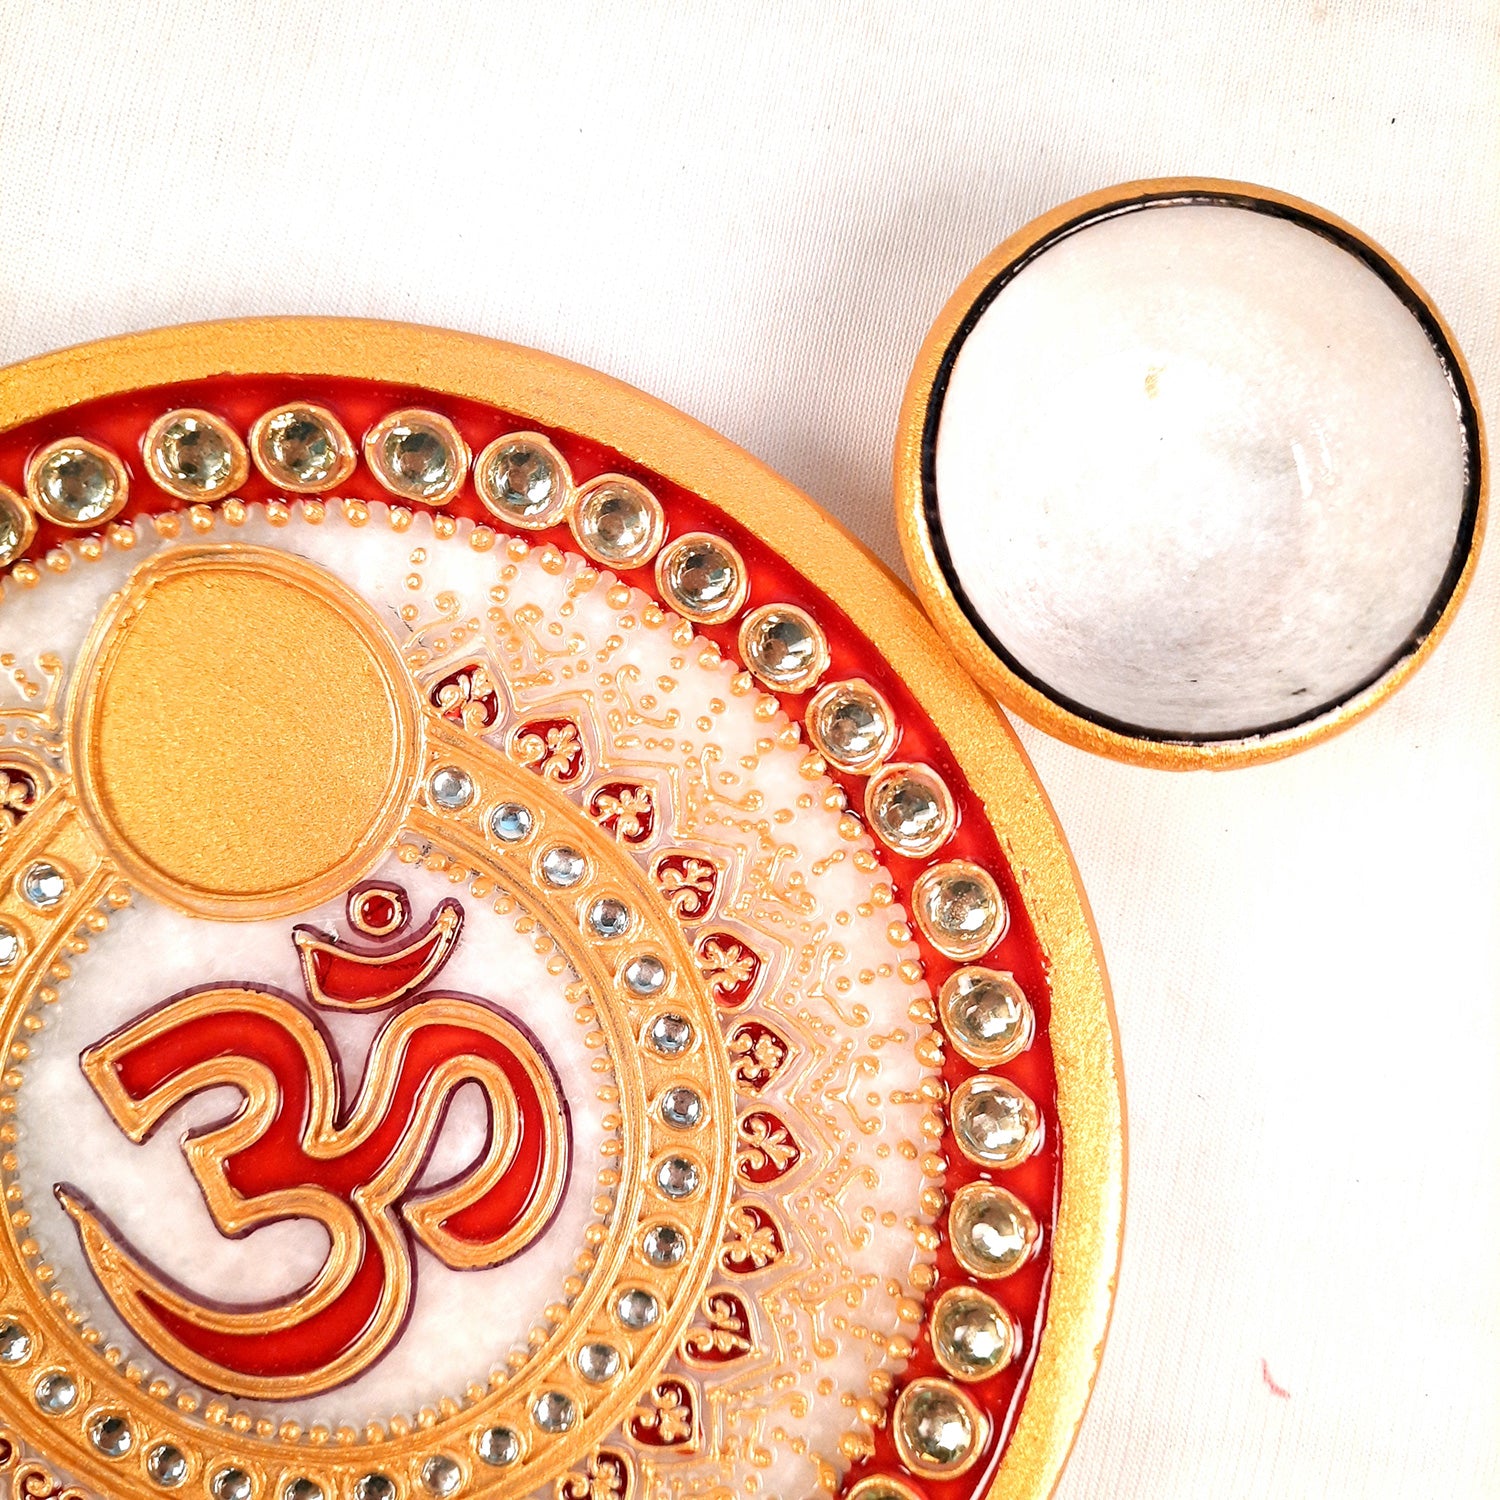 Puja Plate with Diya |Marble Pooja Thali With Heavy Om Design - For Pooja, weddings & Festivals - 6 Inch - Apkamart